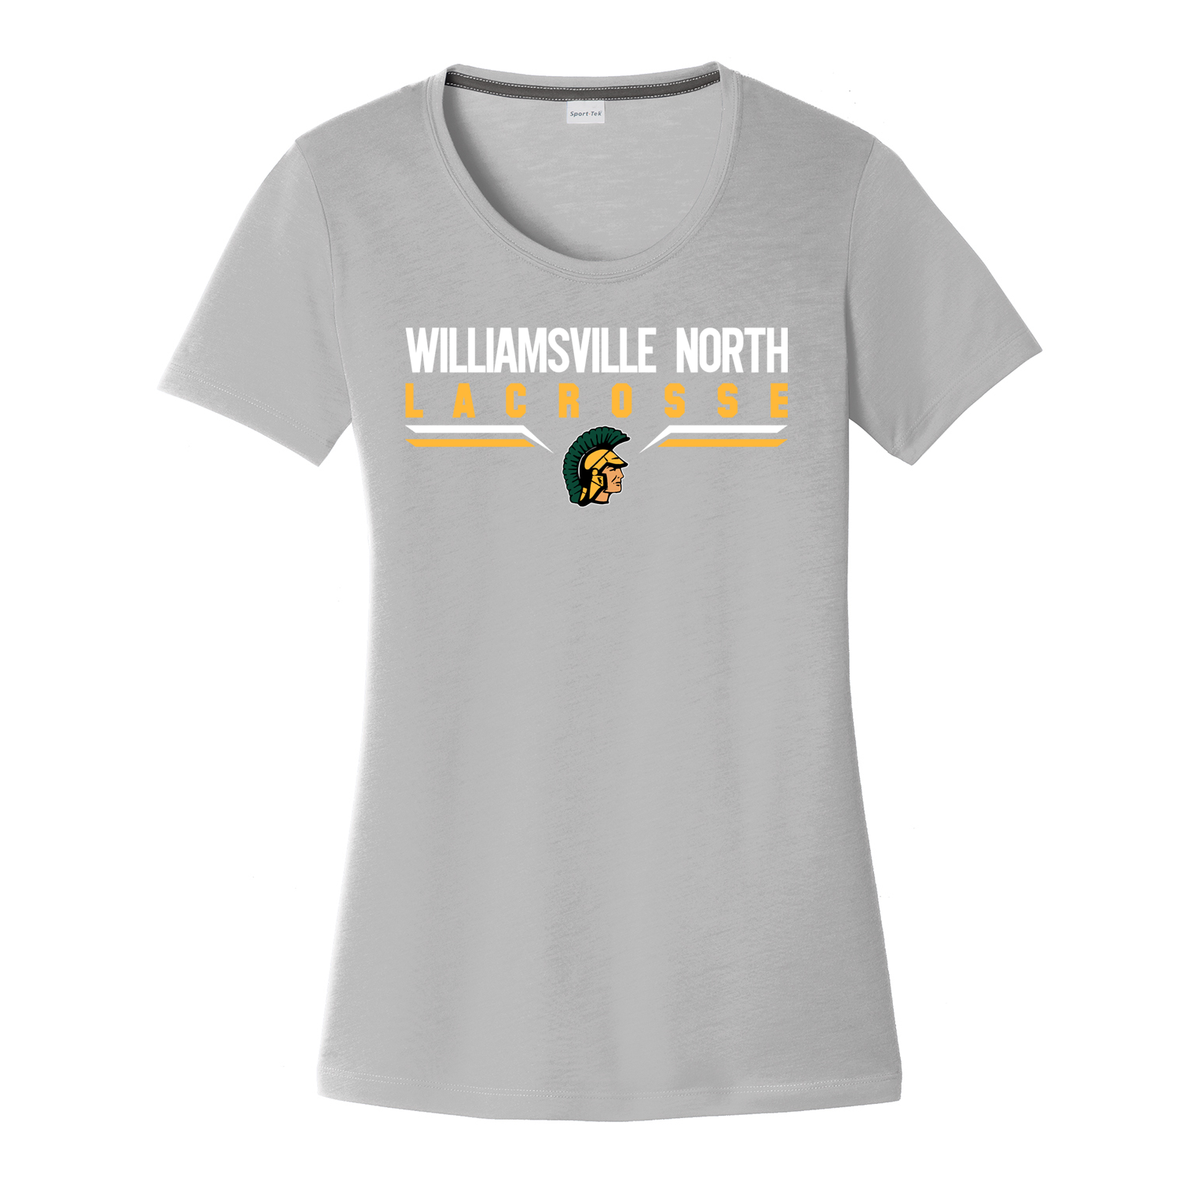 Williamsville North Lacrosse Women's CottonTouch Performance T-Shirt